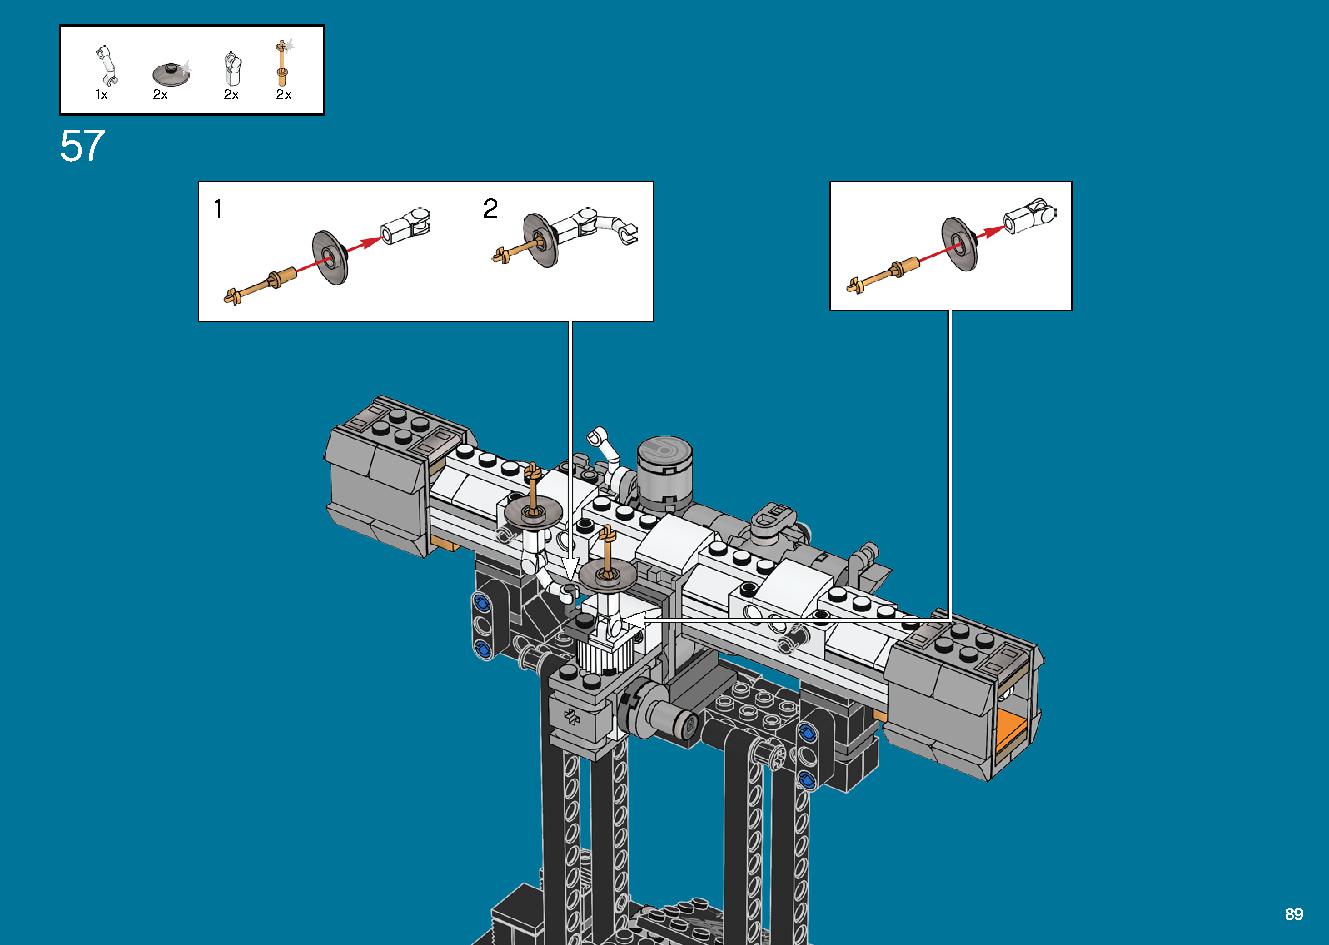 International Space Station 21321 レゴの商品情報 レゴの説明書・組立方法 89 page